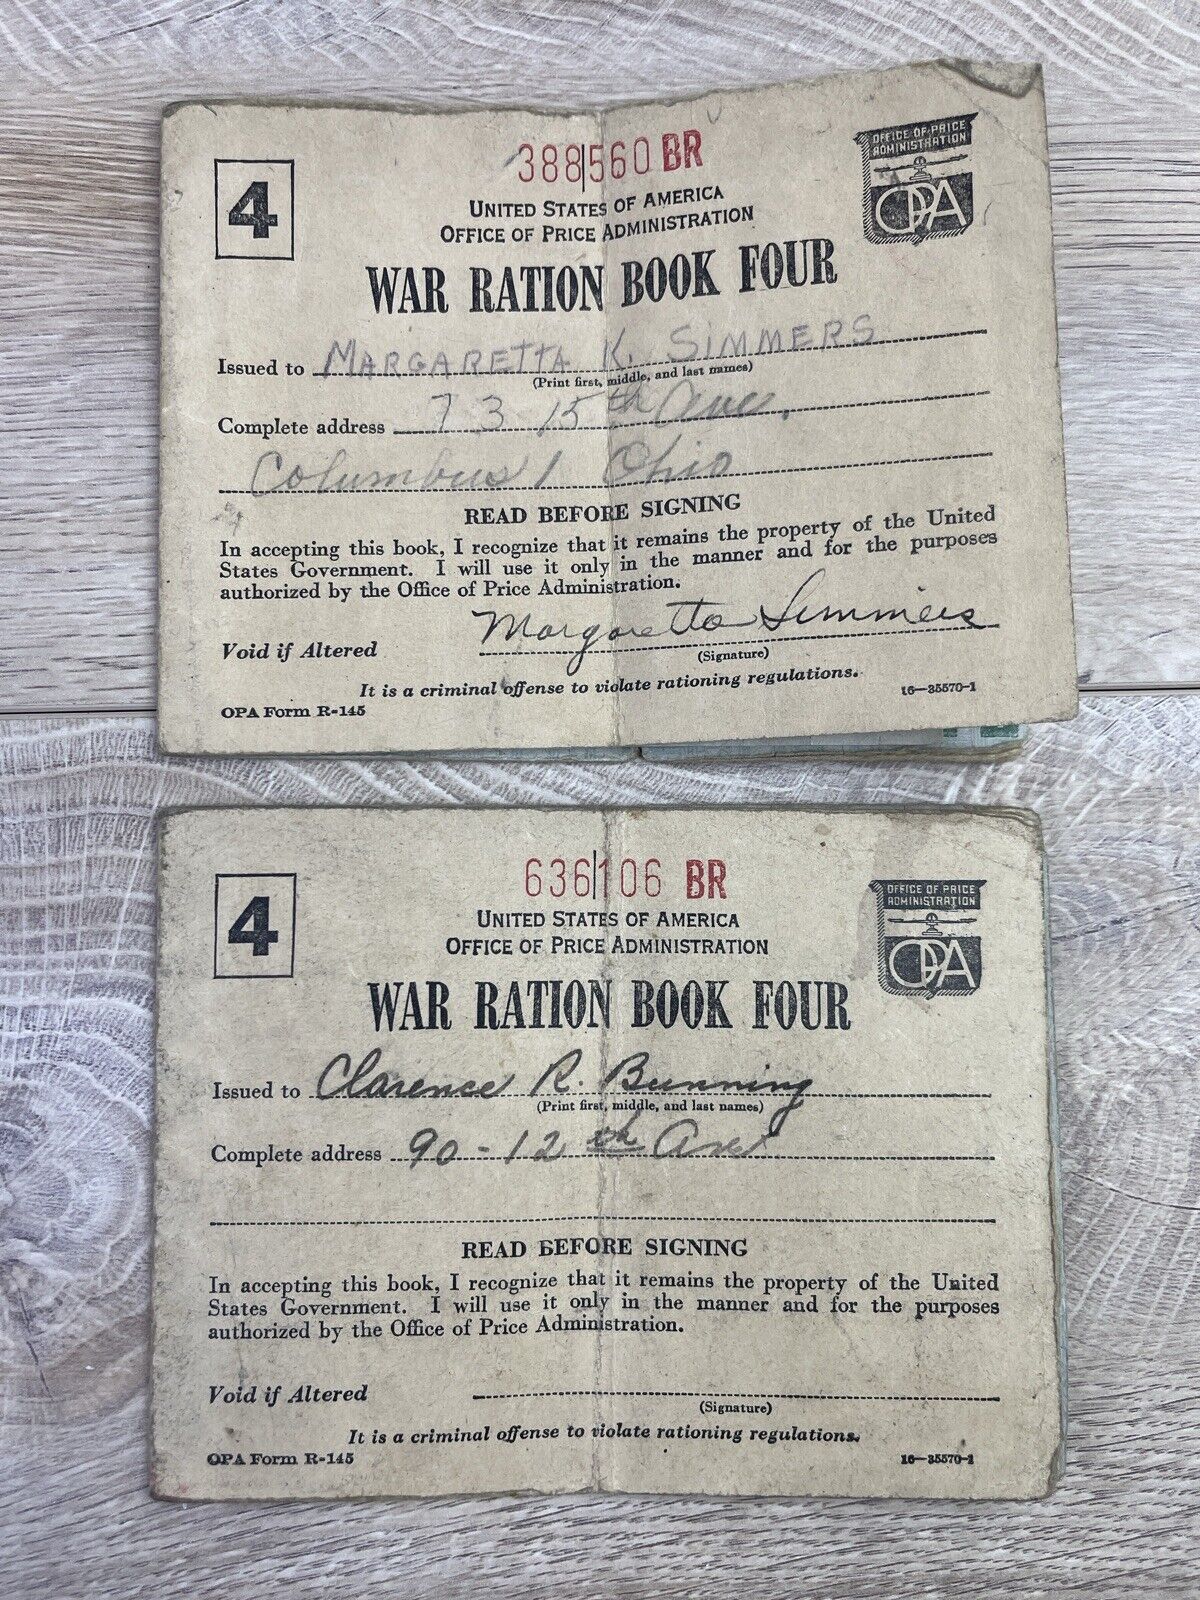 🇺🇲 WW2 1942 1943 War Ration Book #4 w/ Stamps Columbus Ohio Margaretta Simmers